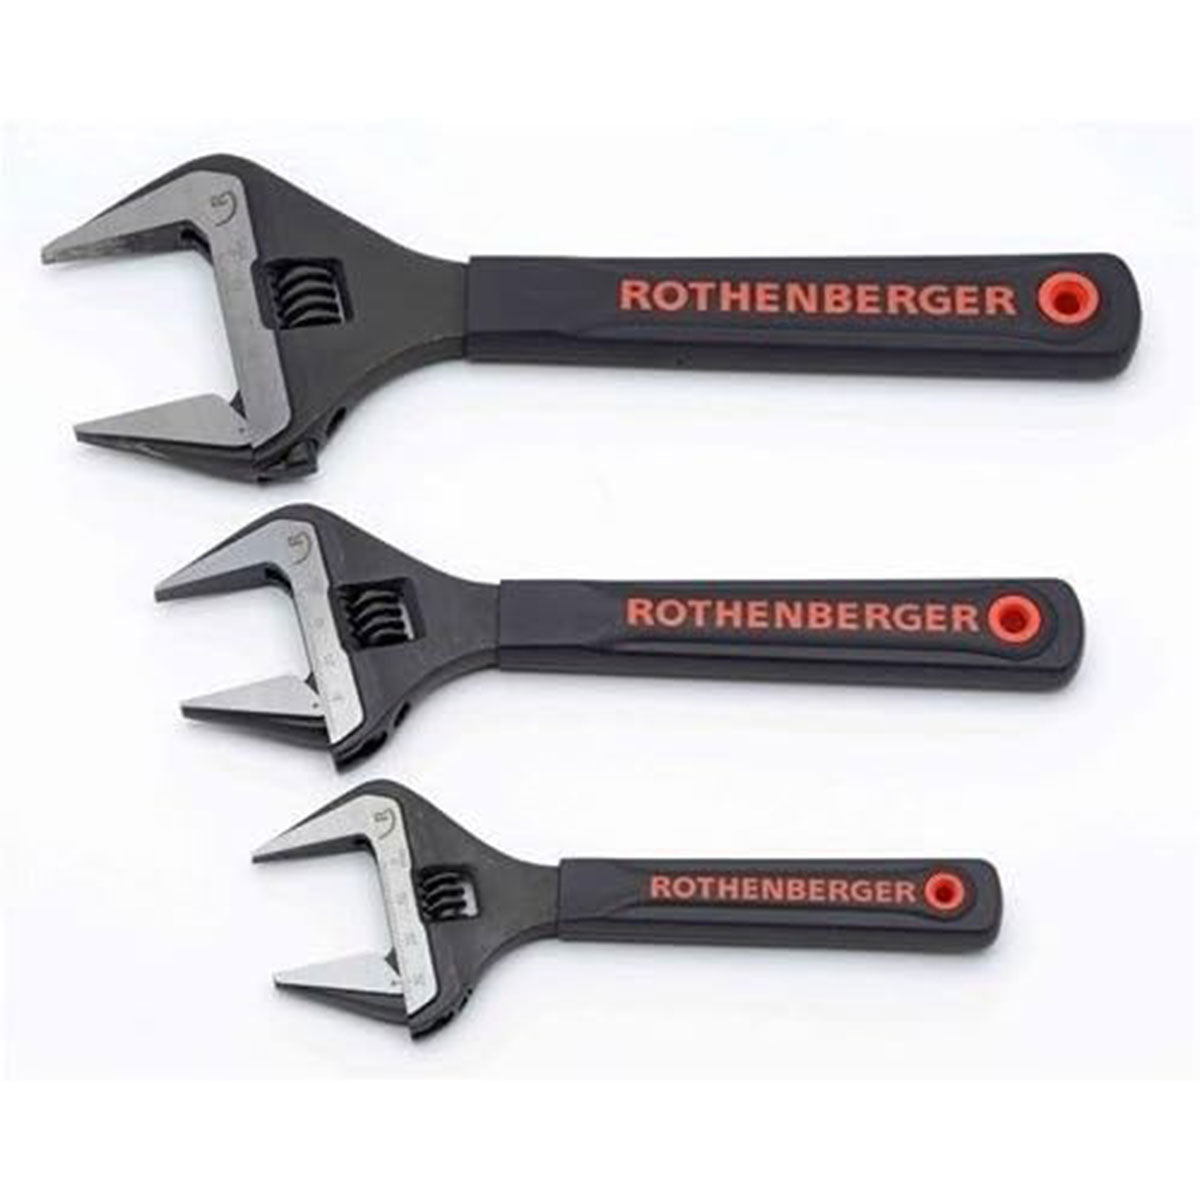 Rothenberger Adjustable Wide Jaw Wrench Set 18047